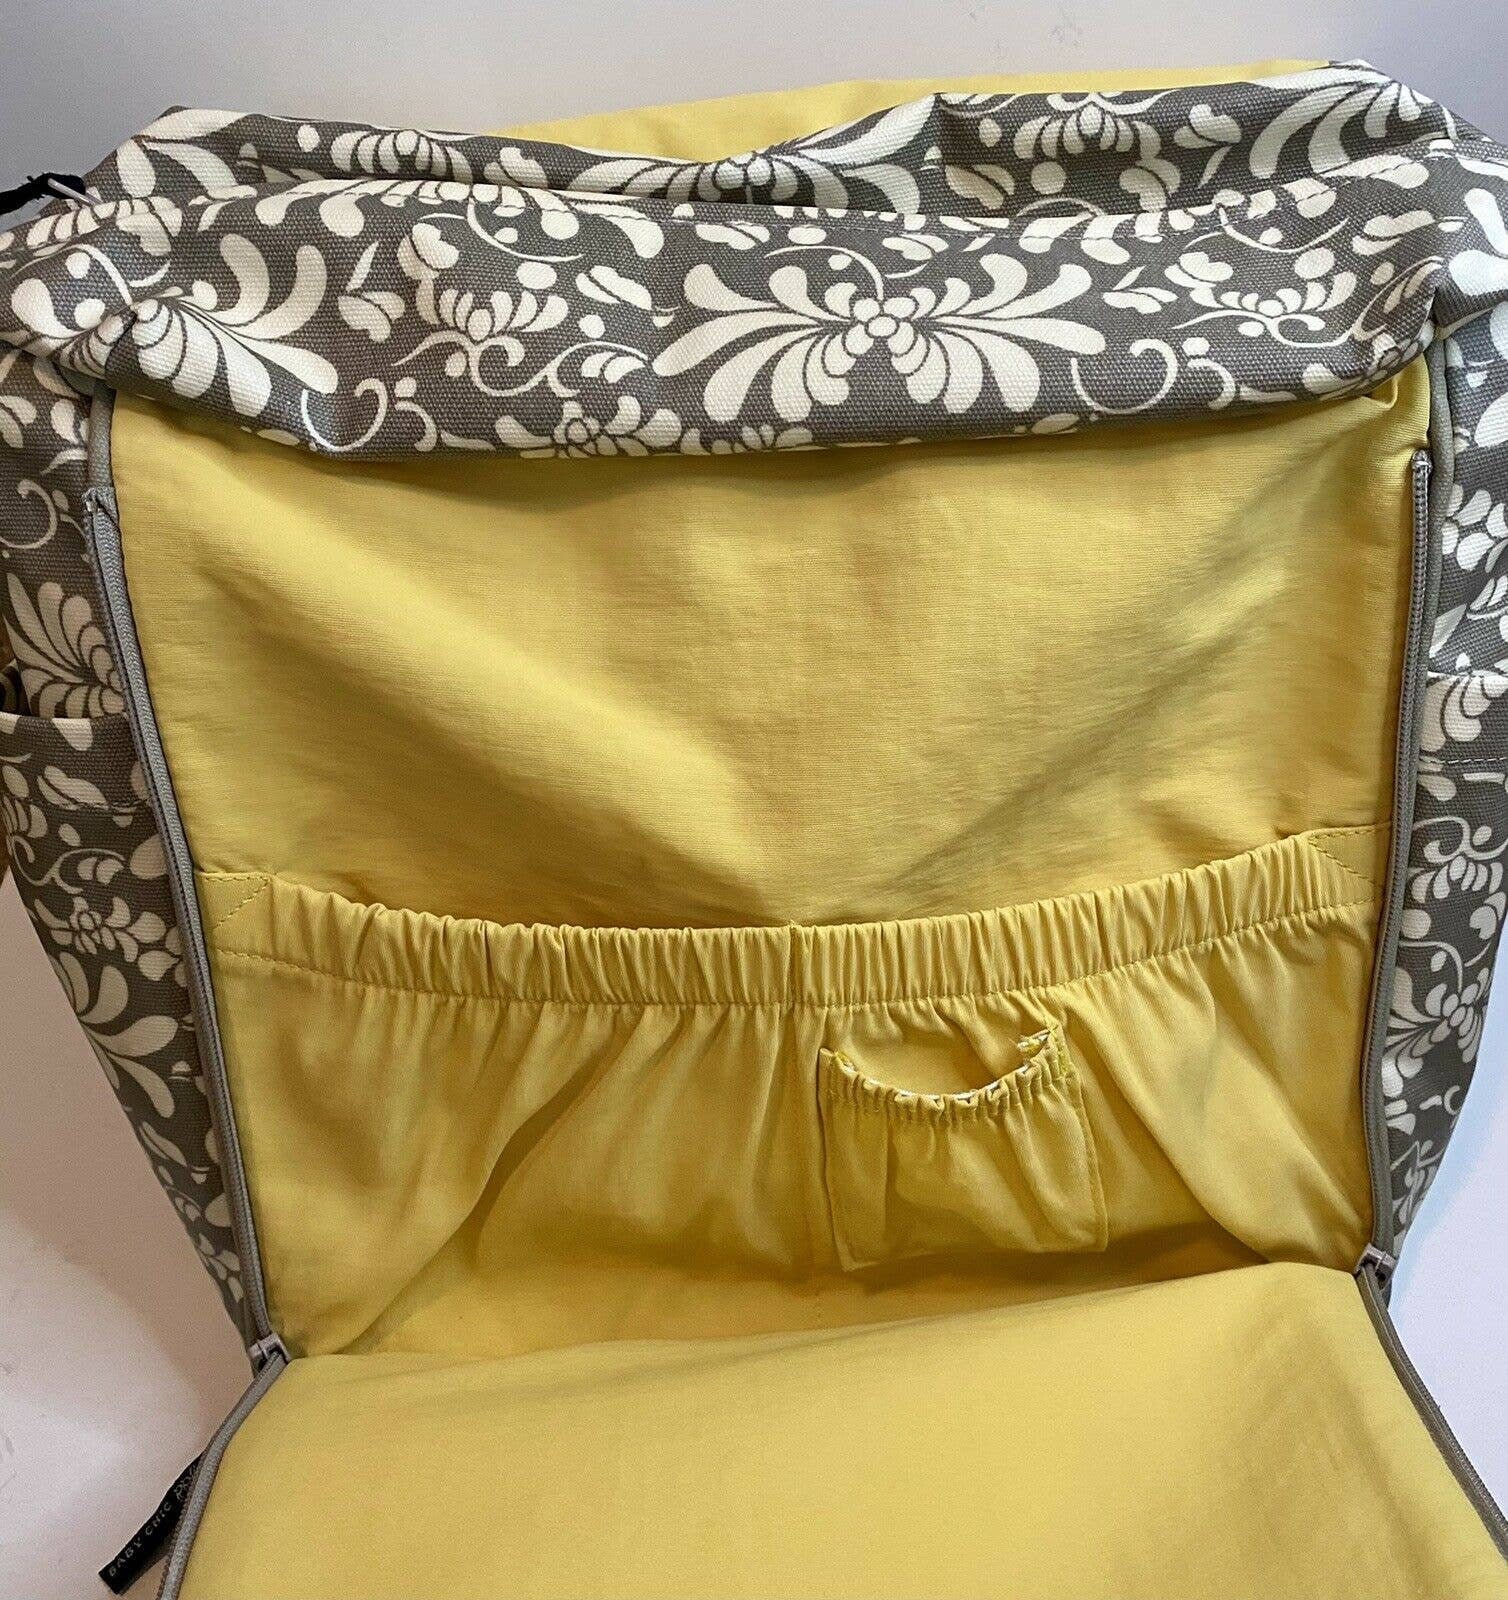 Petunia Pickle Bottom Backpack Diaper Bag BBGL 00 191 Yellow Embroidery  Flower -  Denmark